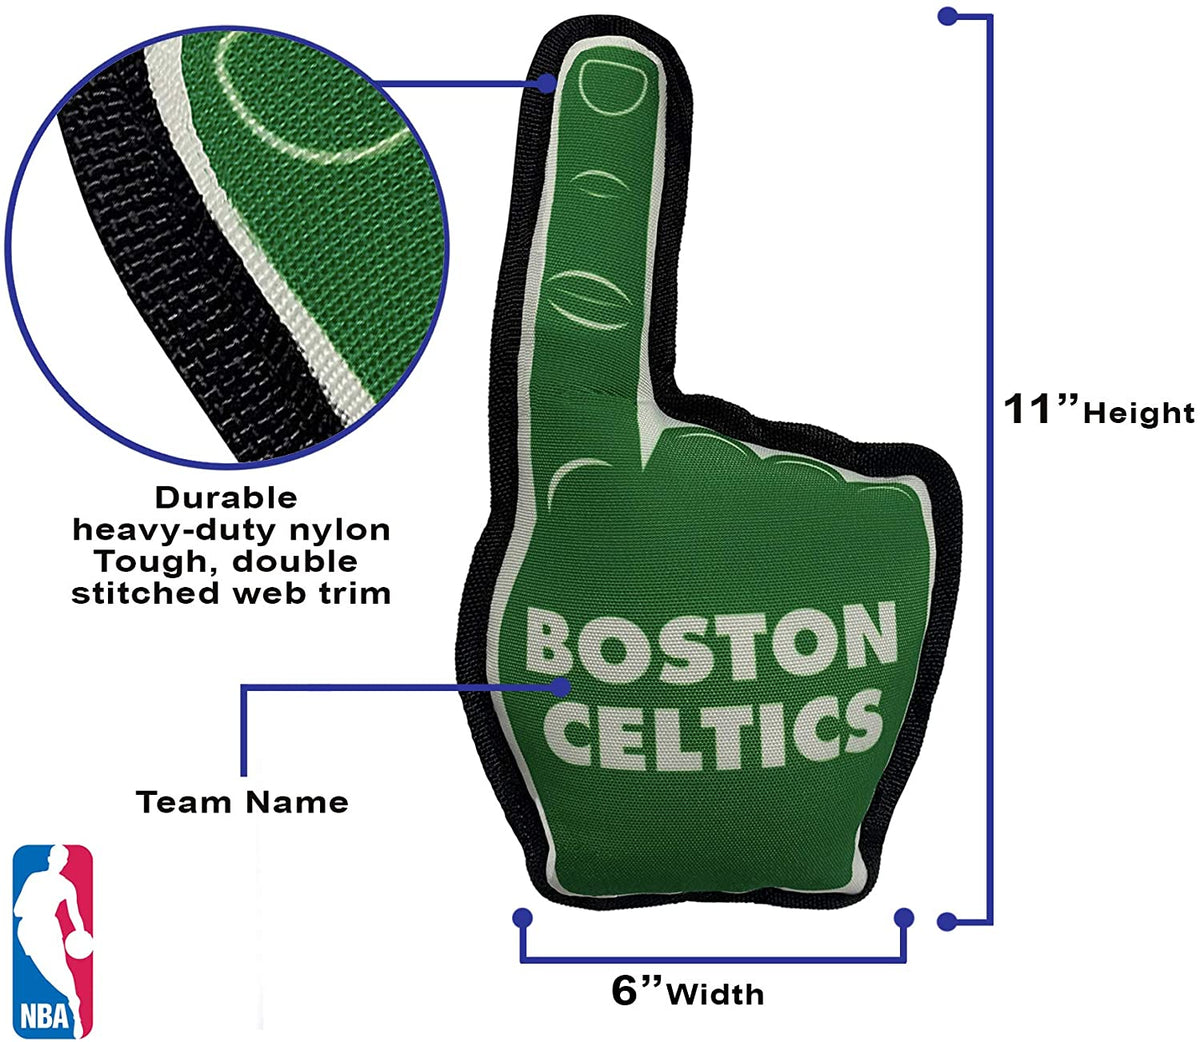 Boston Celtics #1 Fan Toys - 3 Red Rovers